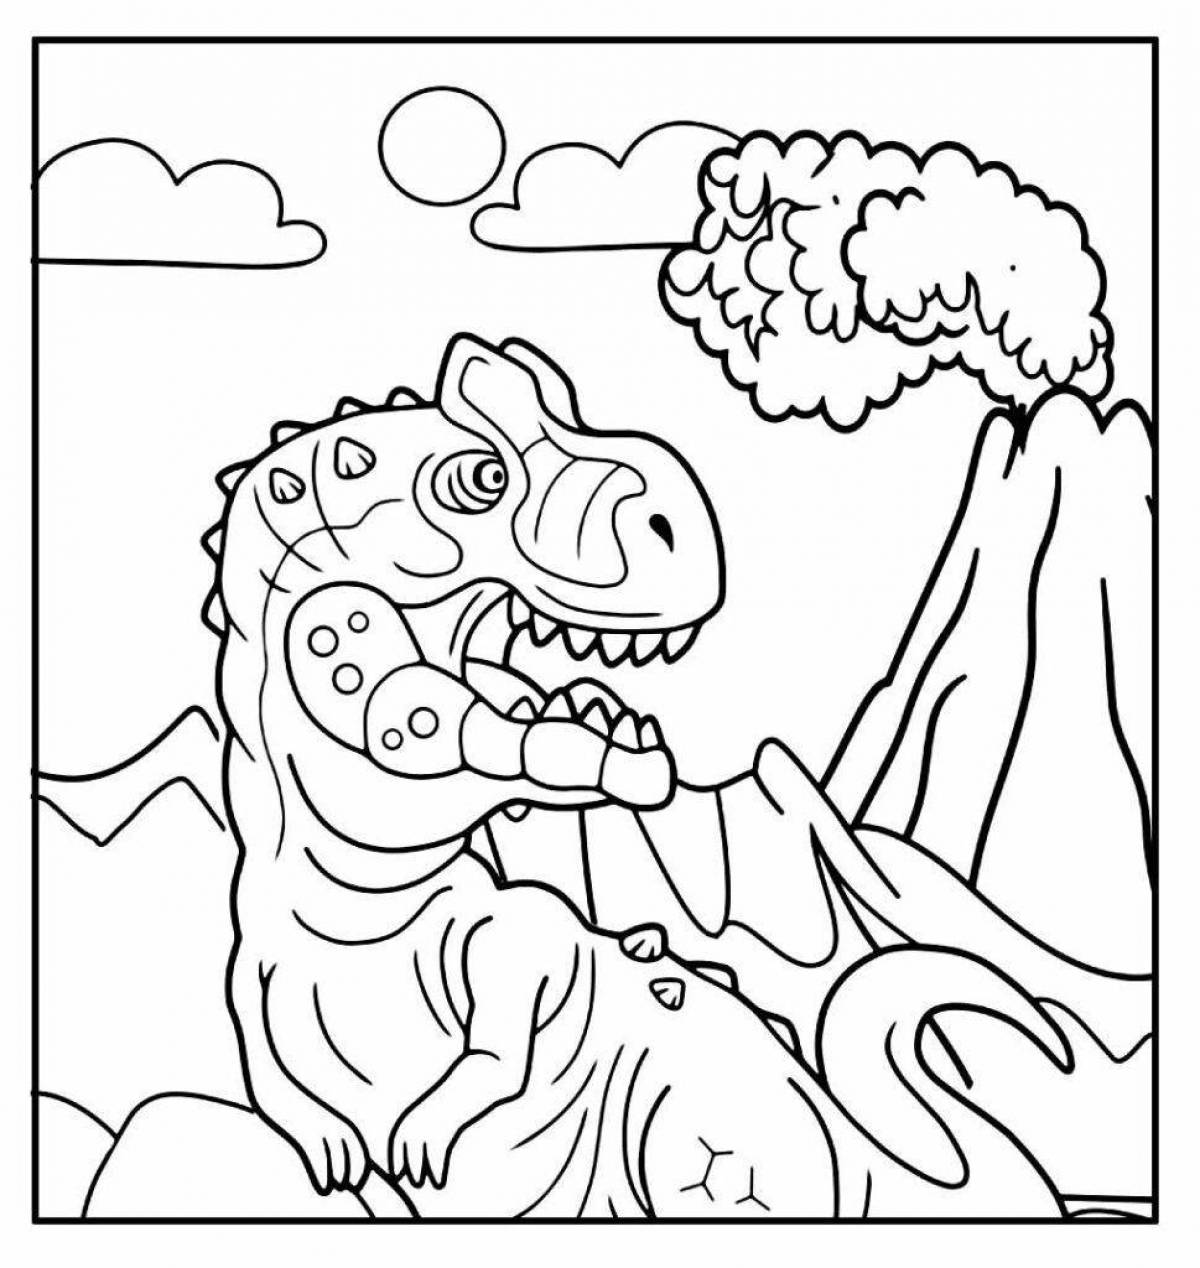 Ferocious dino rex coloring page